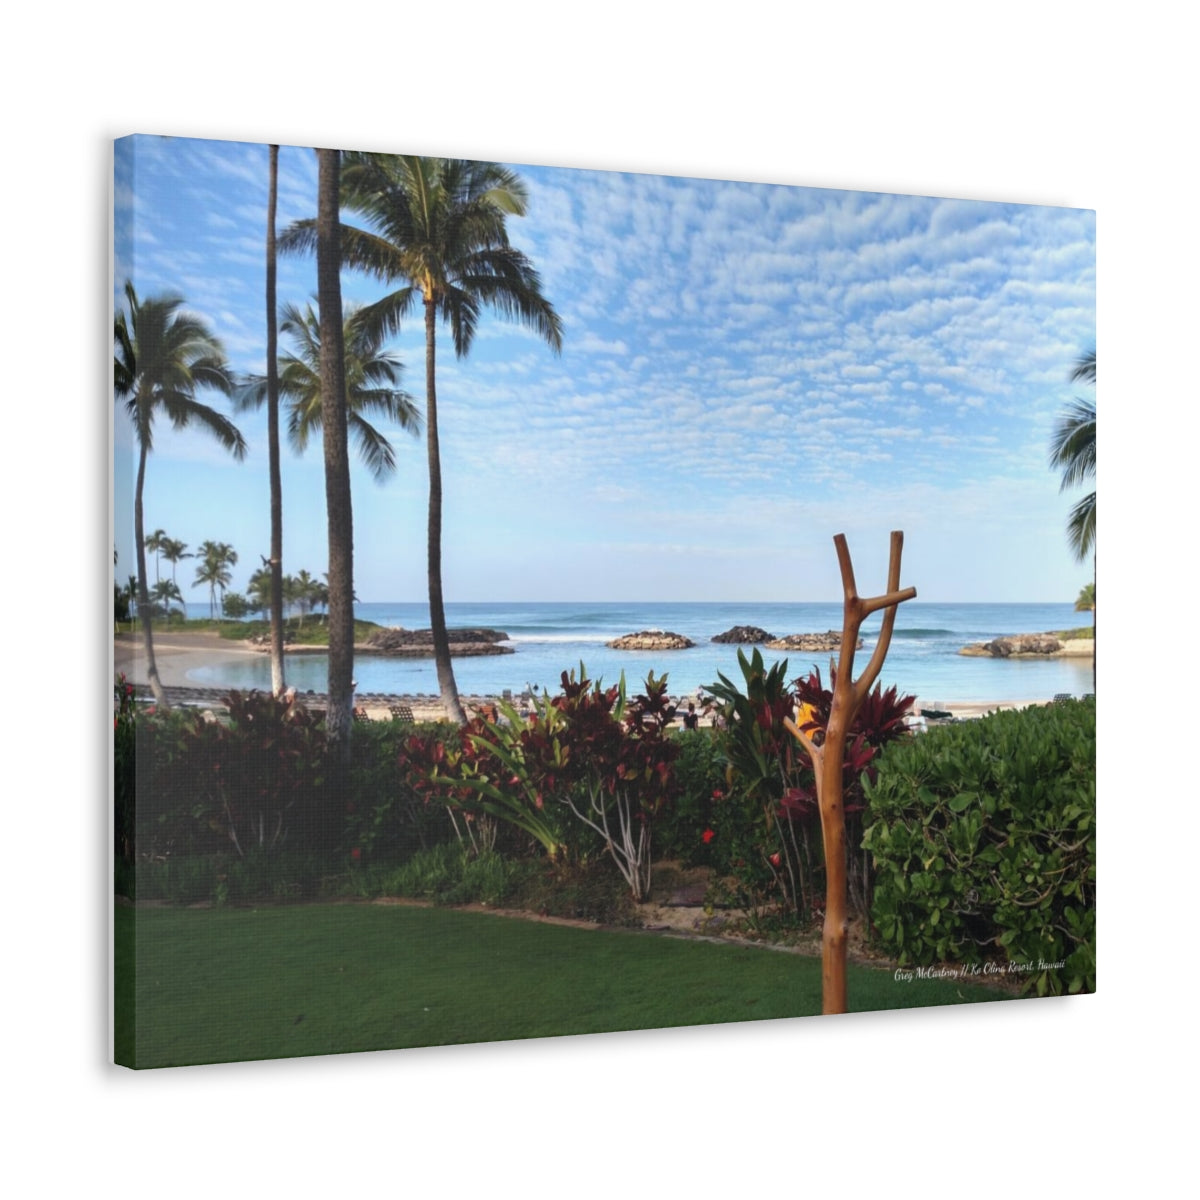 Artwork - Aloha Morning View on Canvas